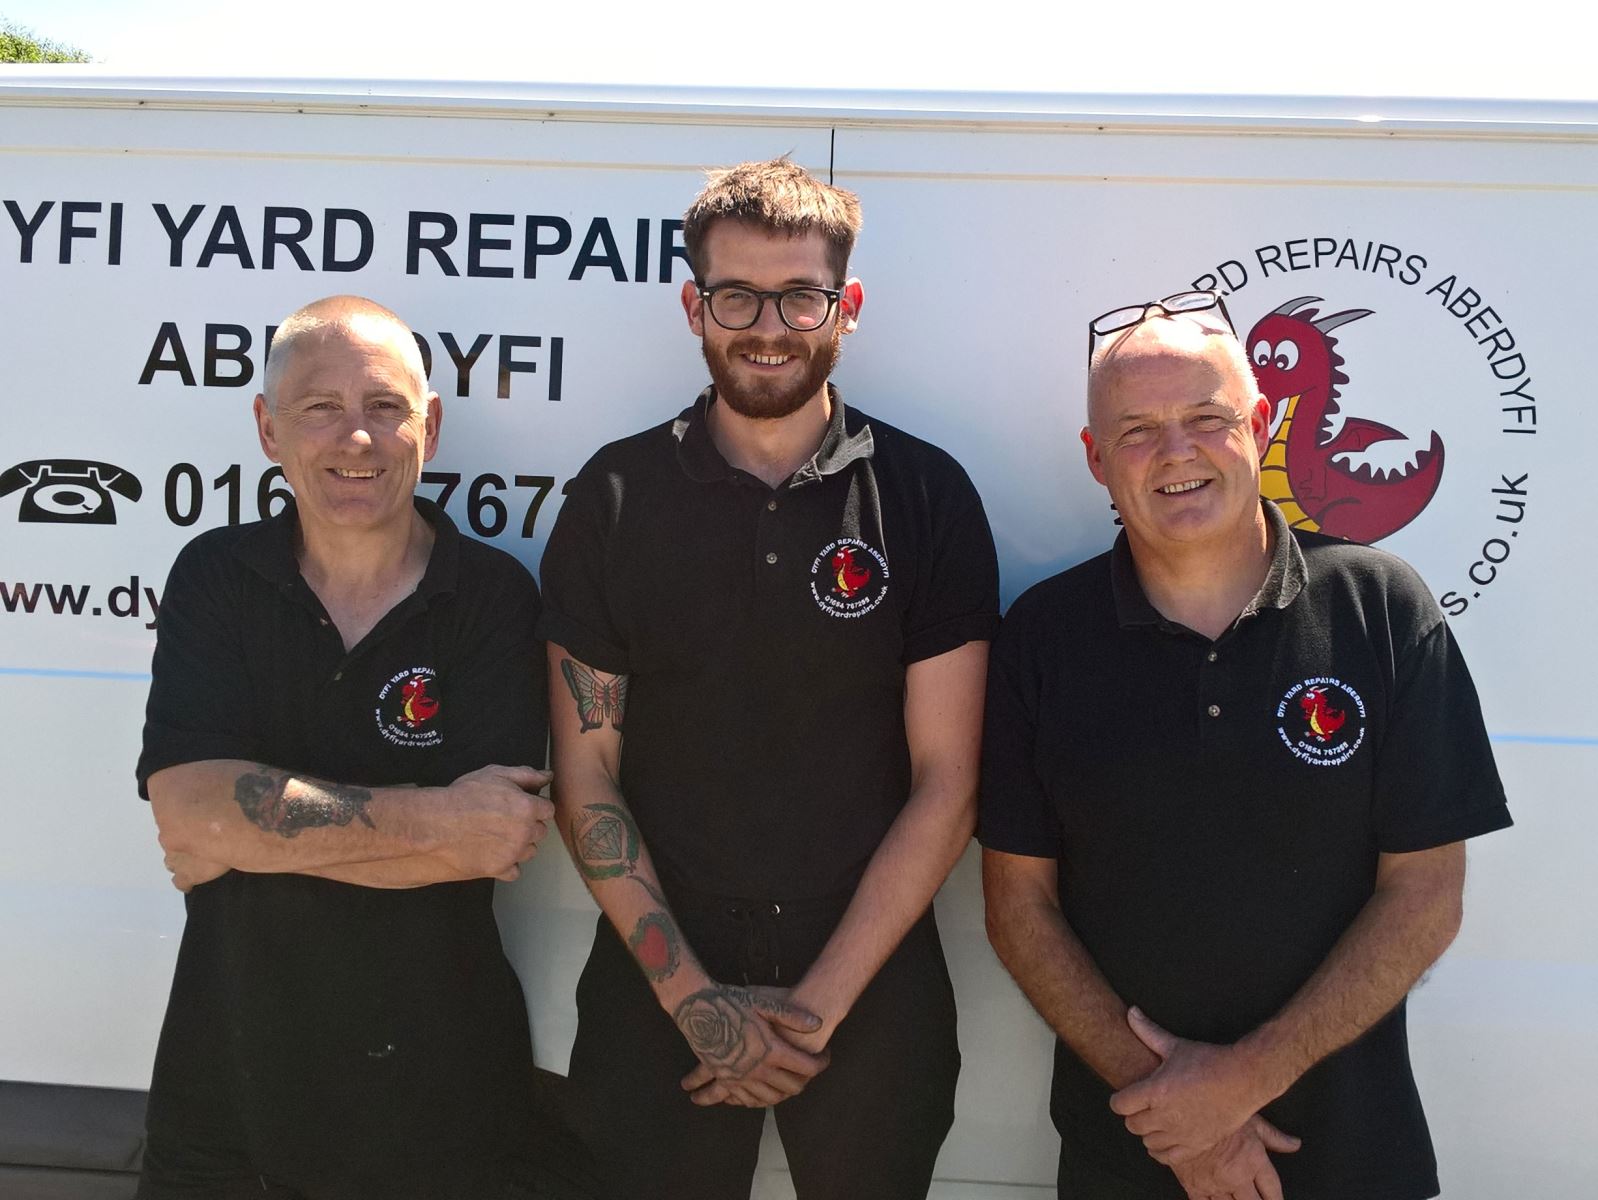 The team at Dyfi Yard Repairs Ltd